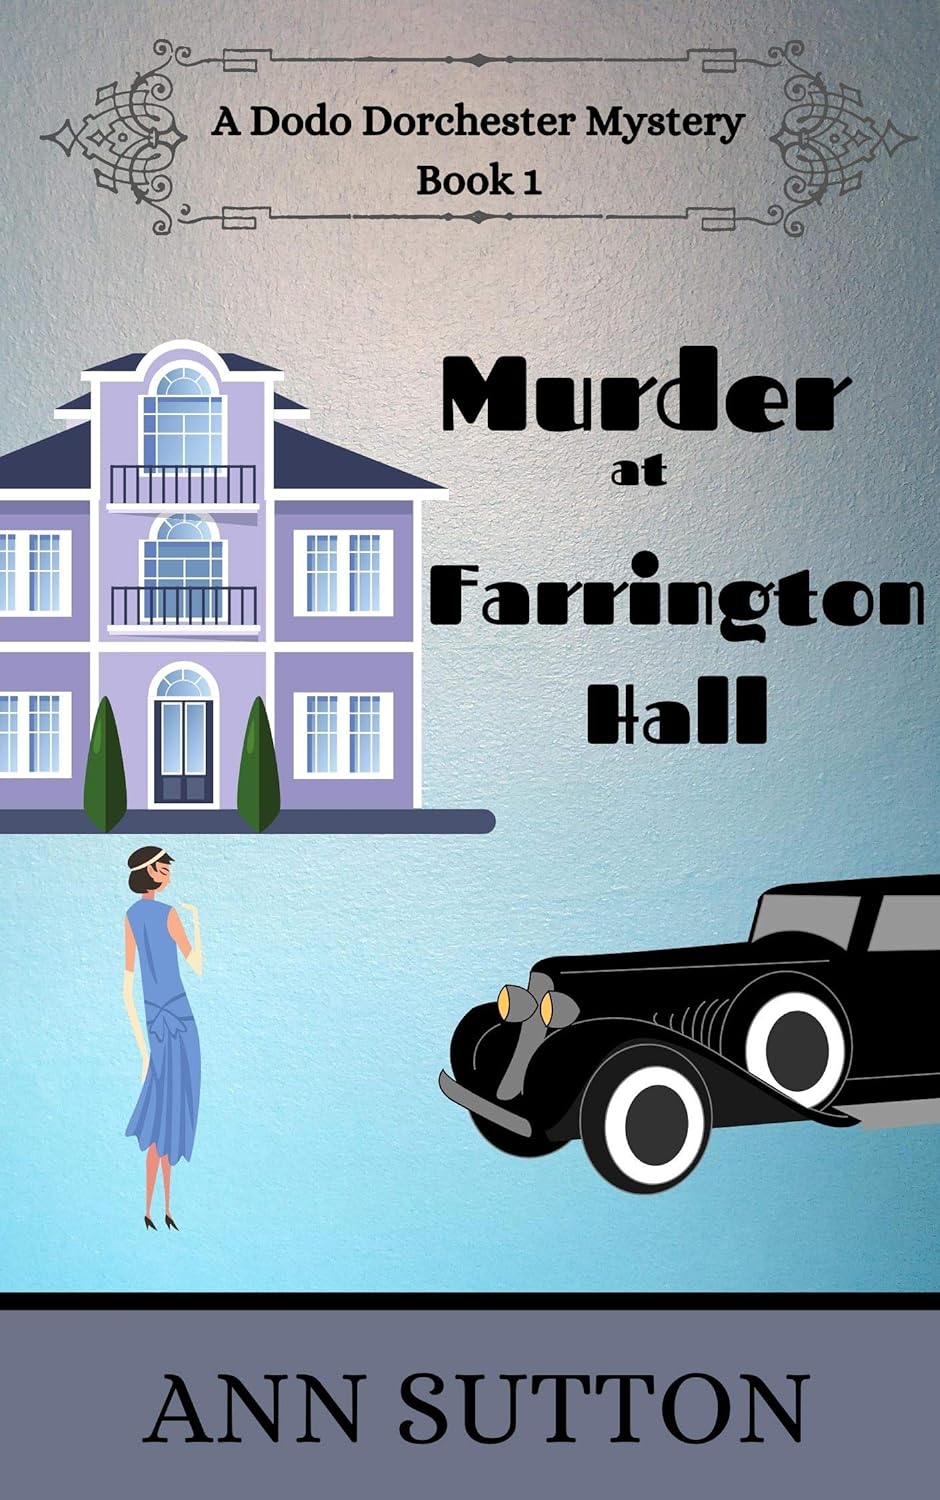 Murder at Farrington Hall Dodo Dorchester Mystery